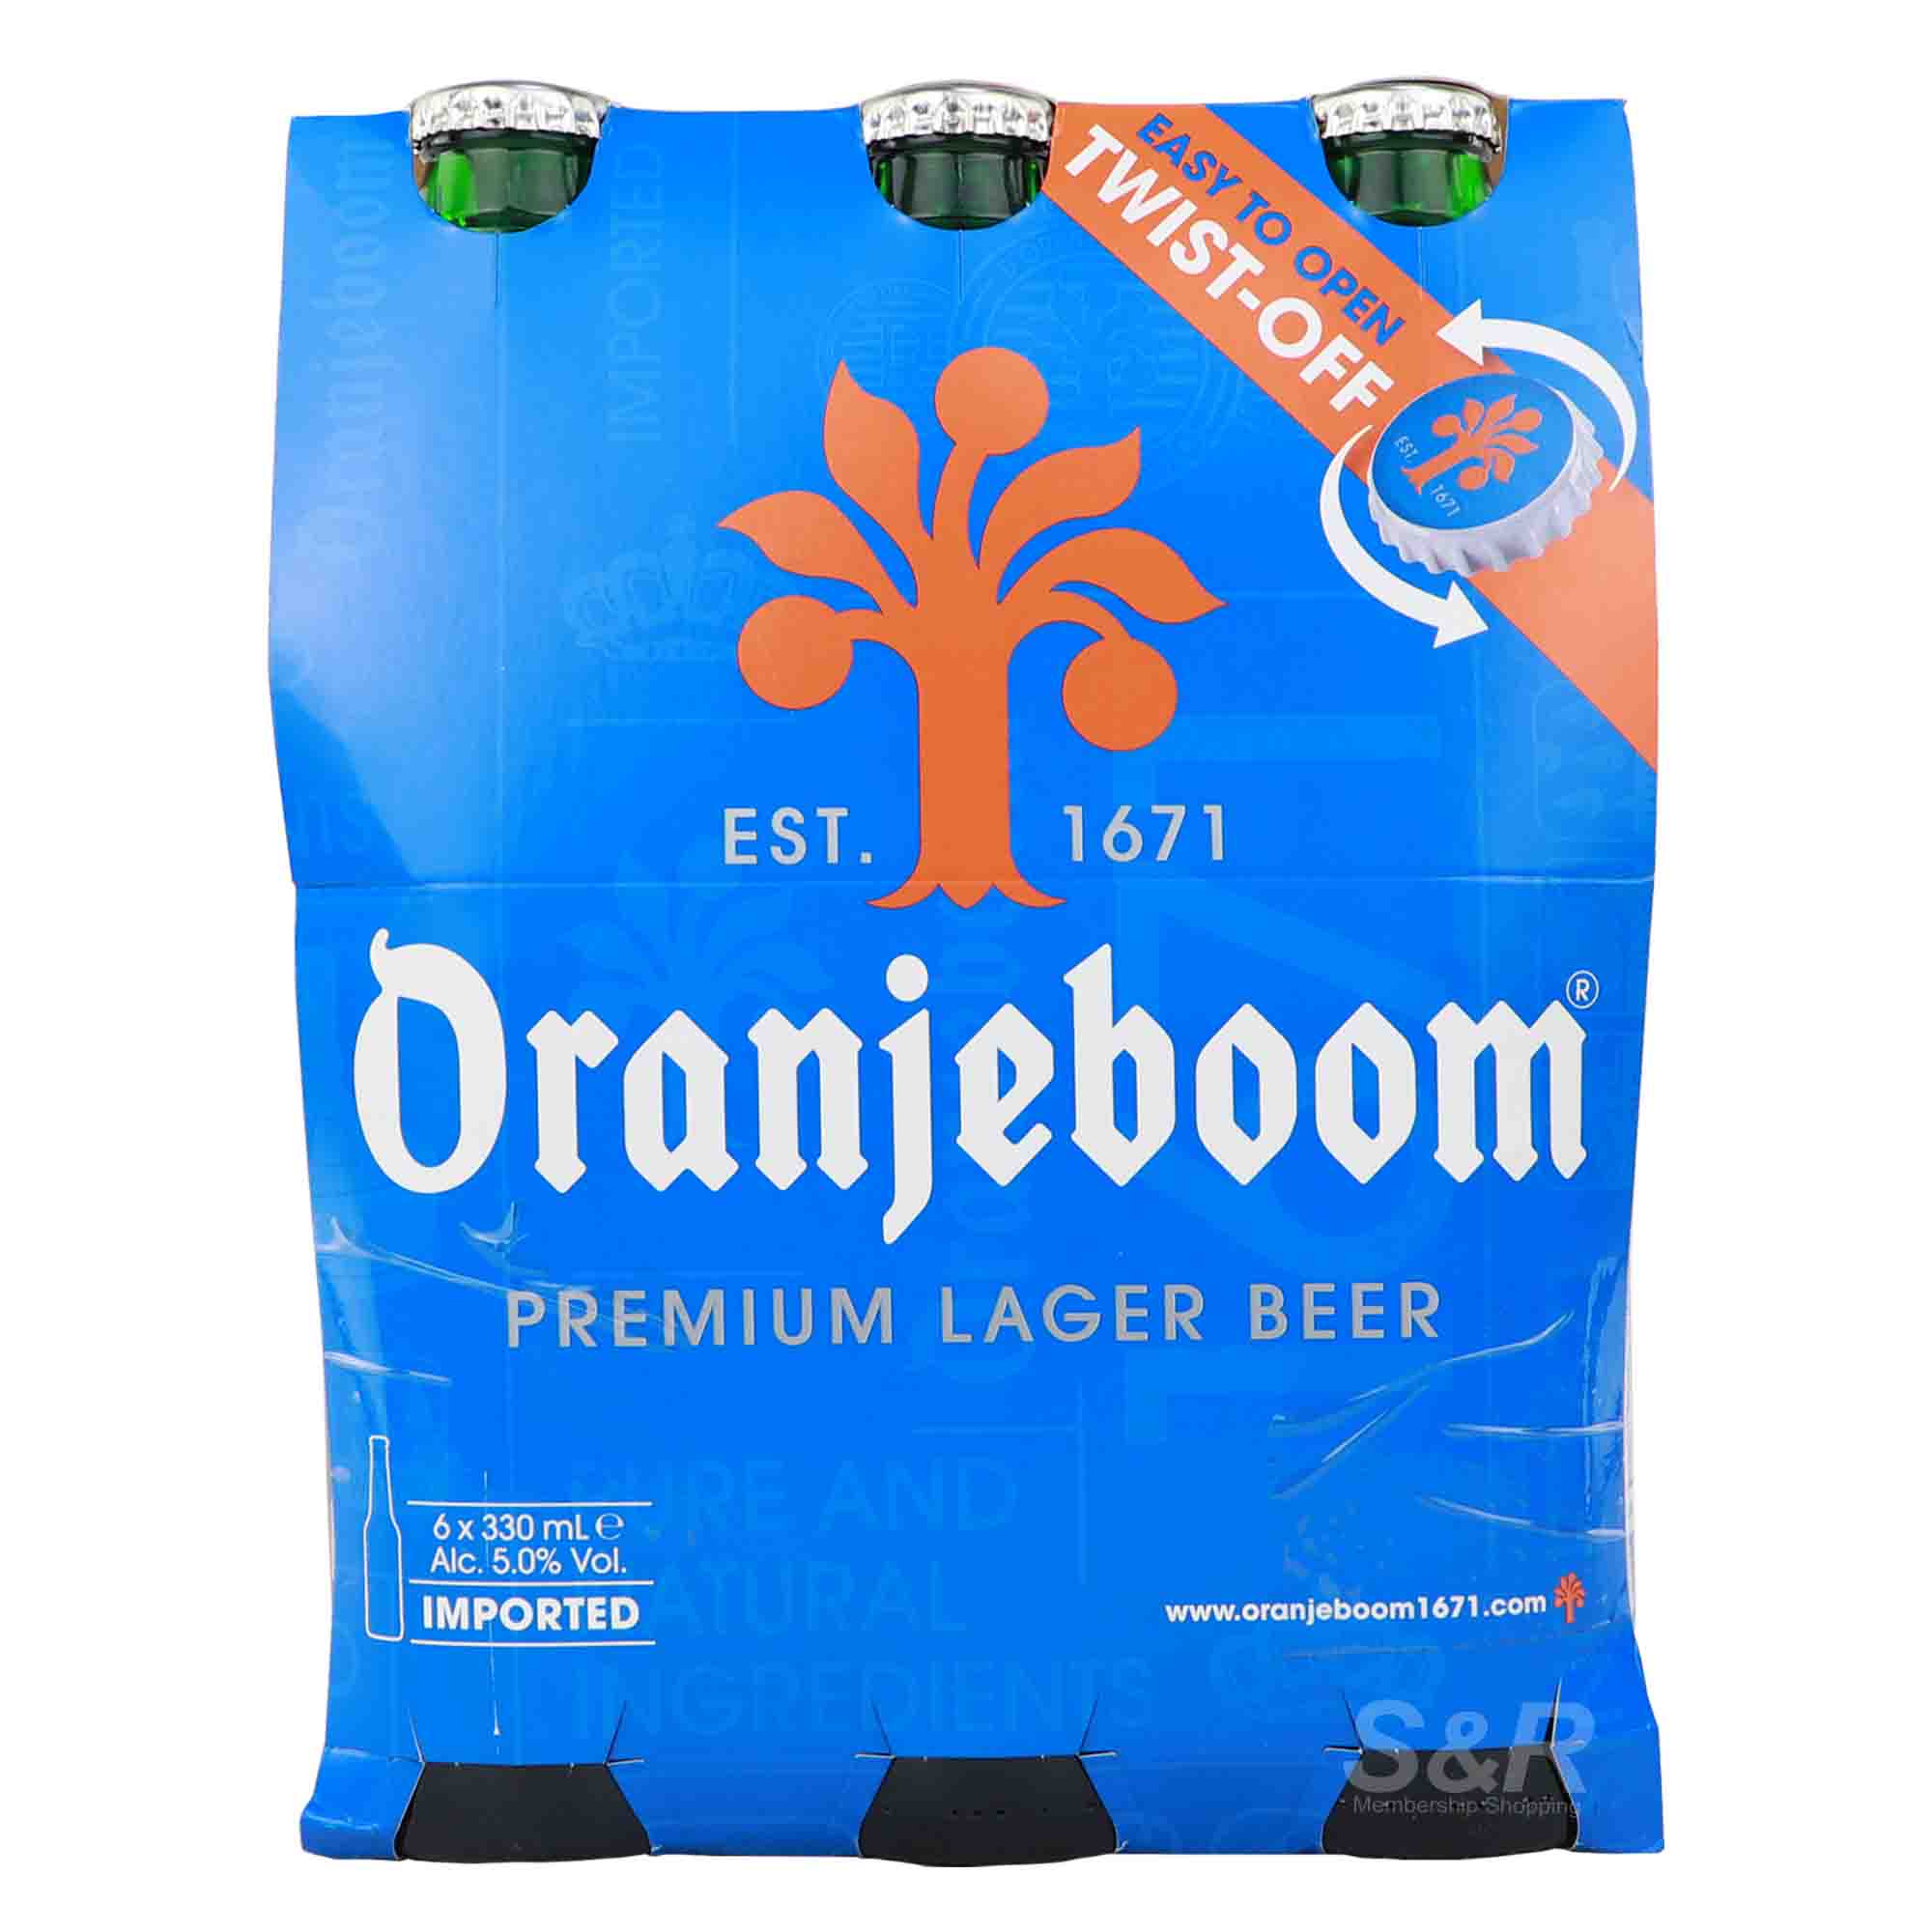 Oranjeboom Premium Lager 6 bottles